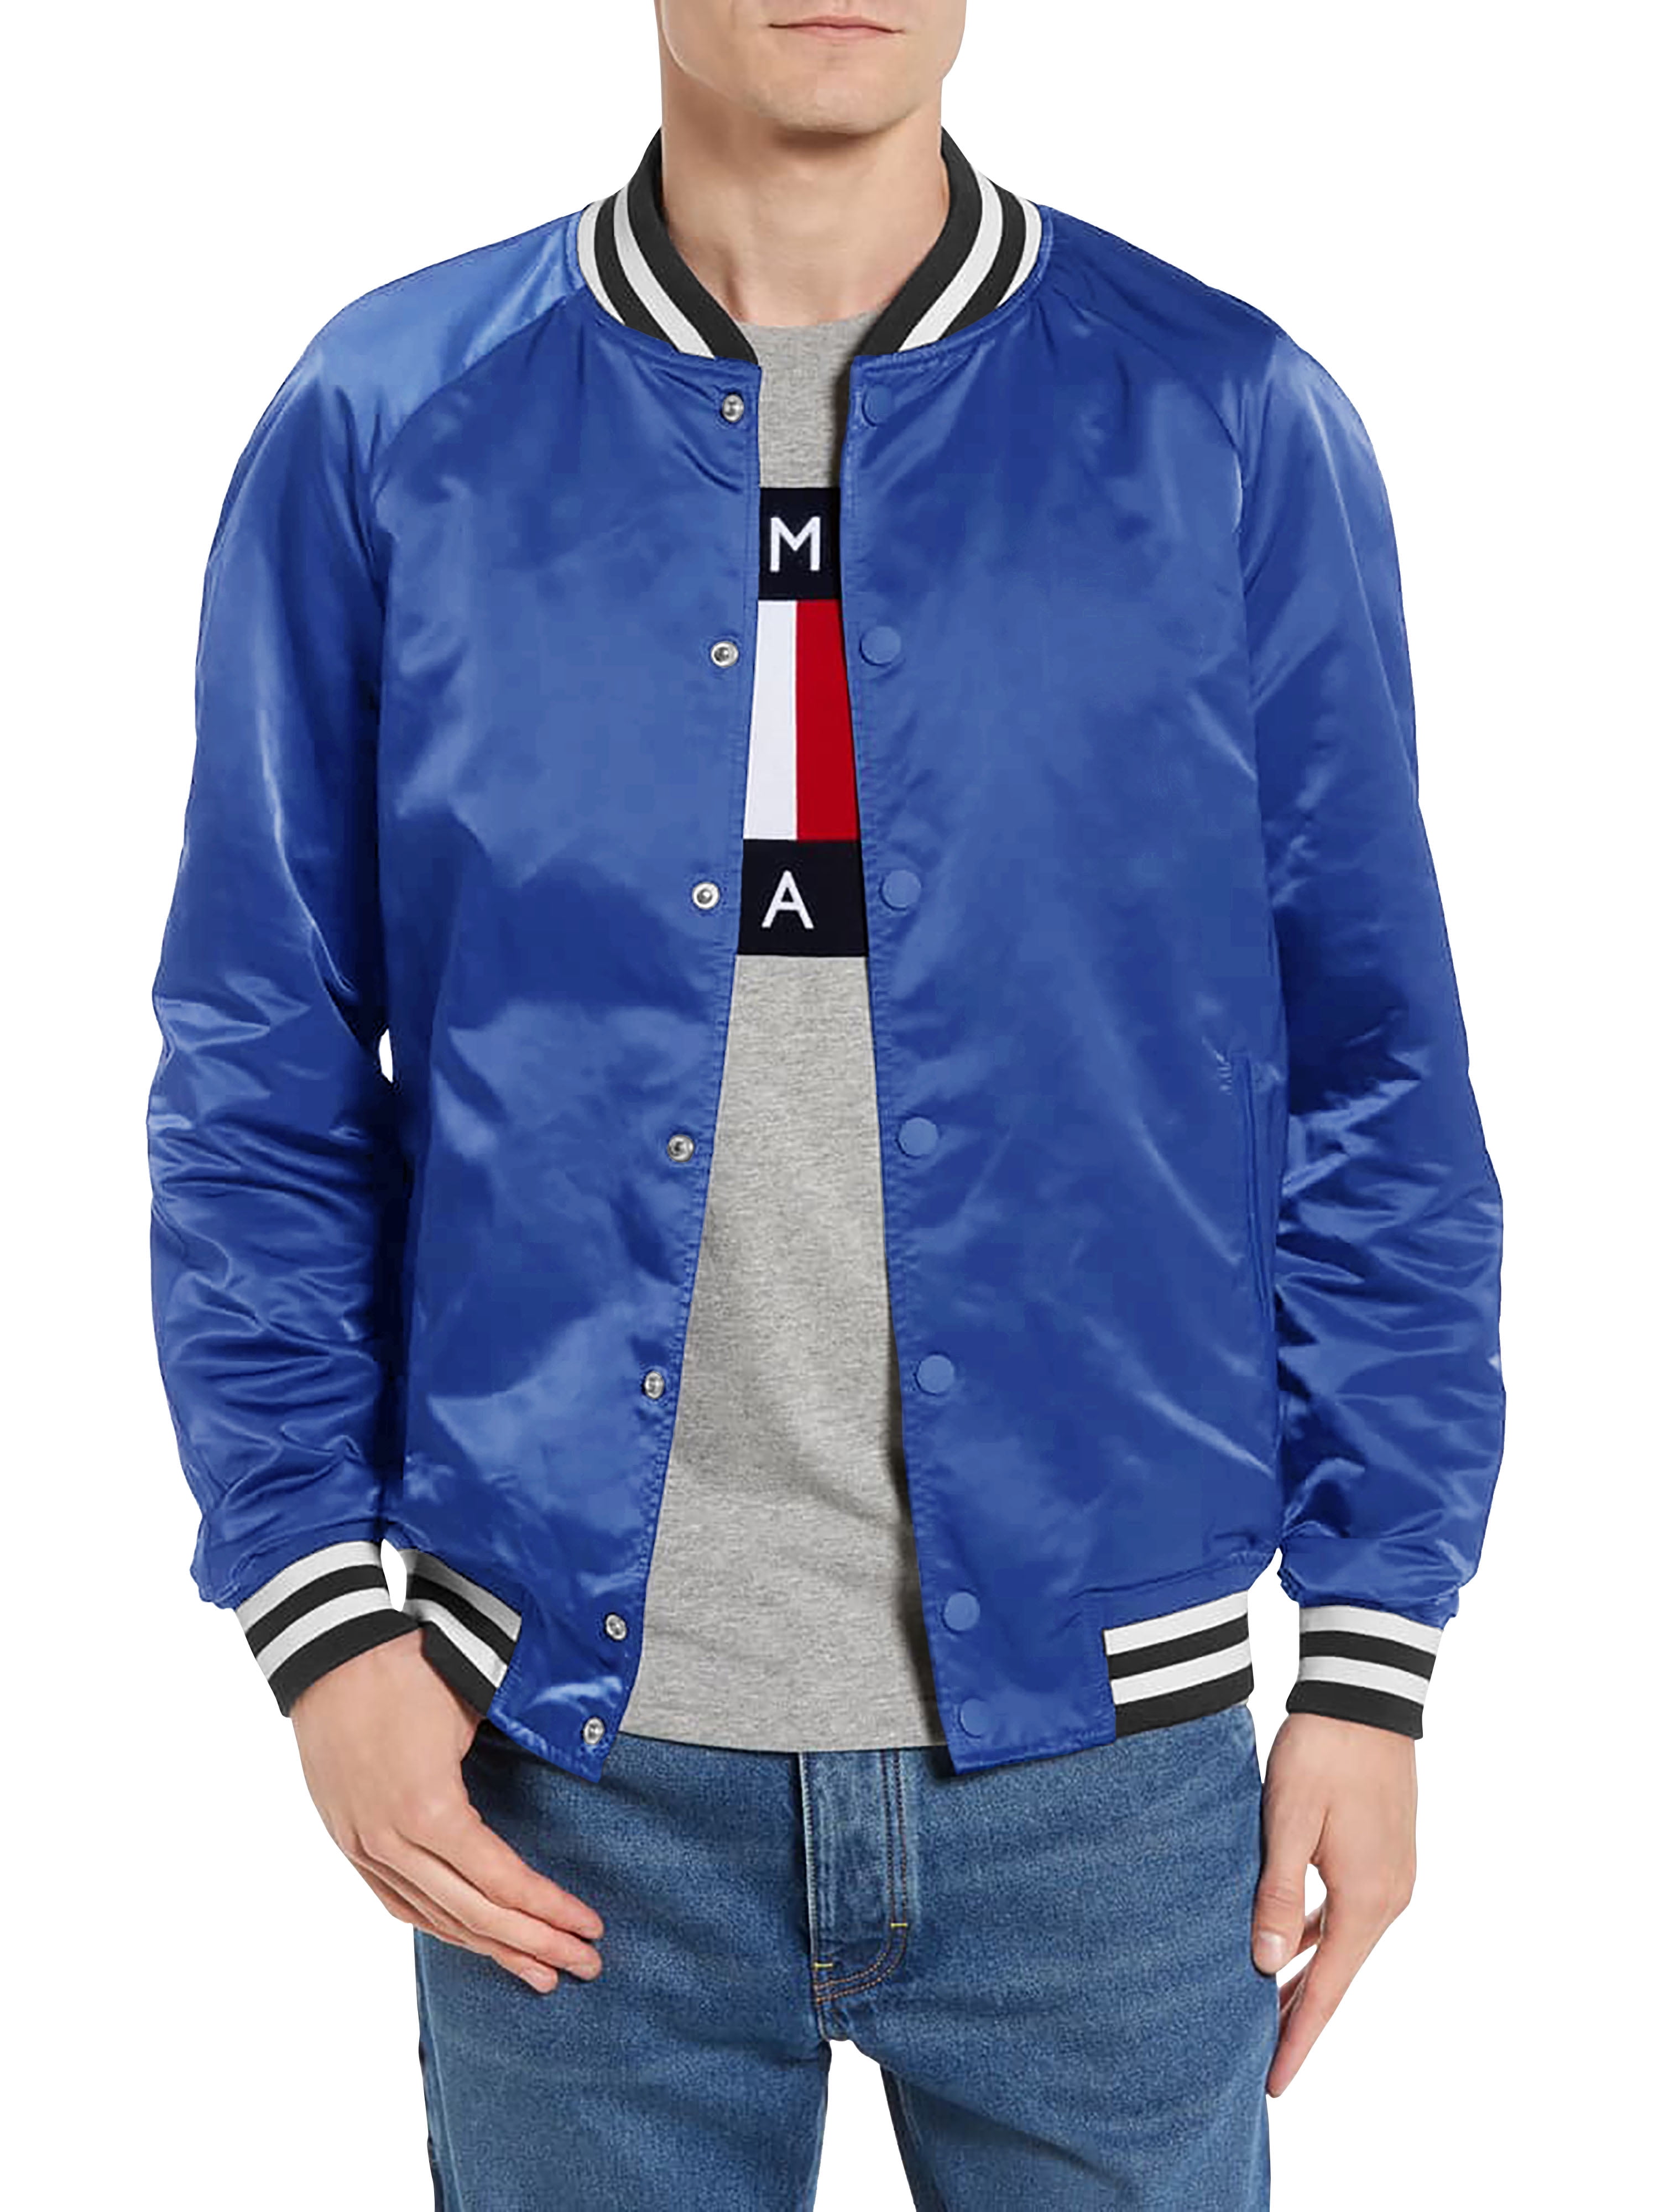 Mens Contrast Color Bomber Jacket Full Zip Up Stand Collar Varsity Jacket Coat